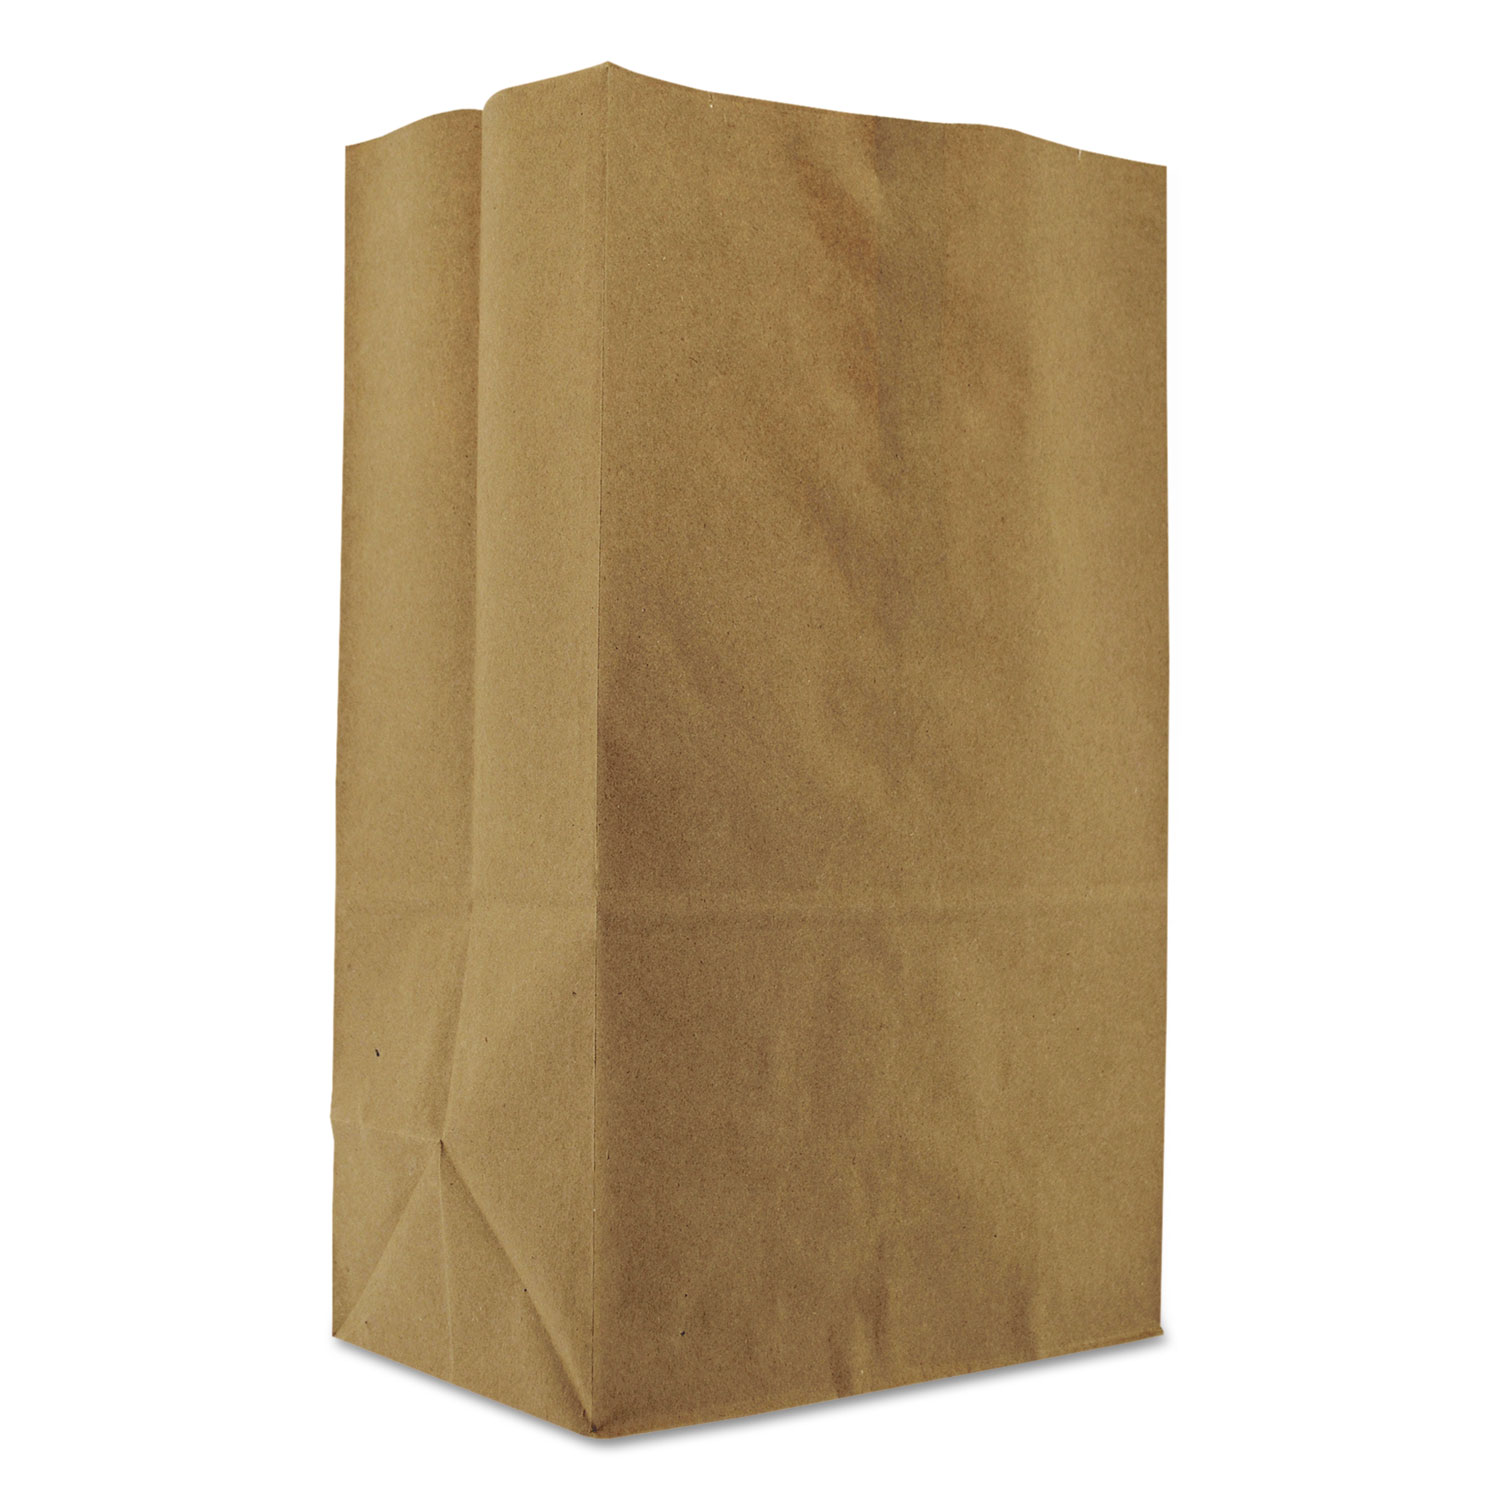  General 80083 Grocery Paper Bags, 57 lbs Capacity, 1/8 BBL, 10.13w x 6.75d x 14.38h, Kraft, 500 Bags (BAGSK1857) 